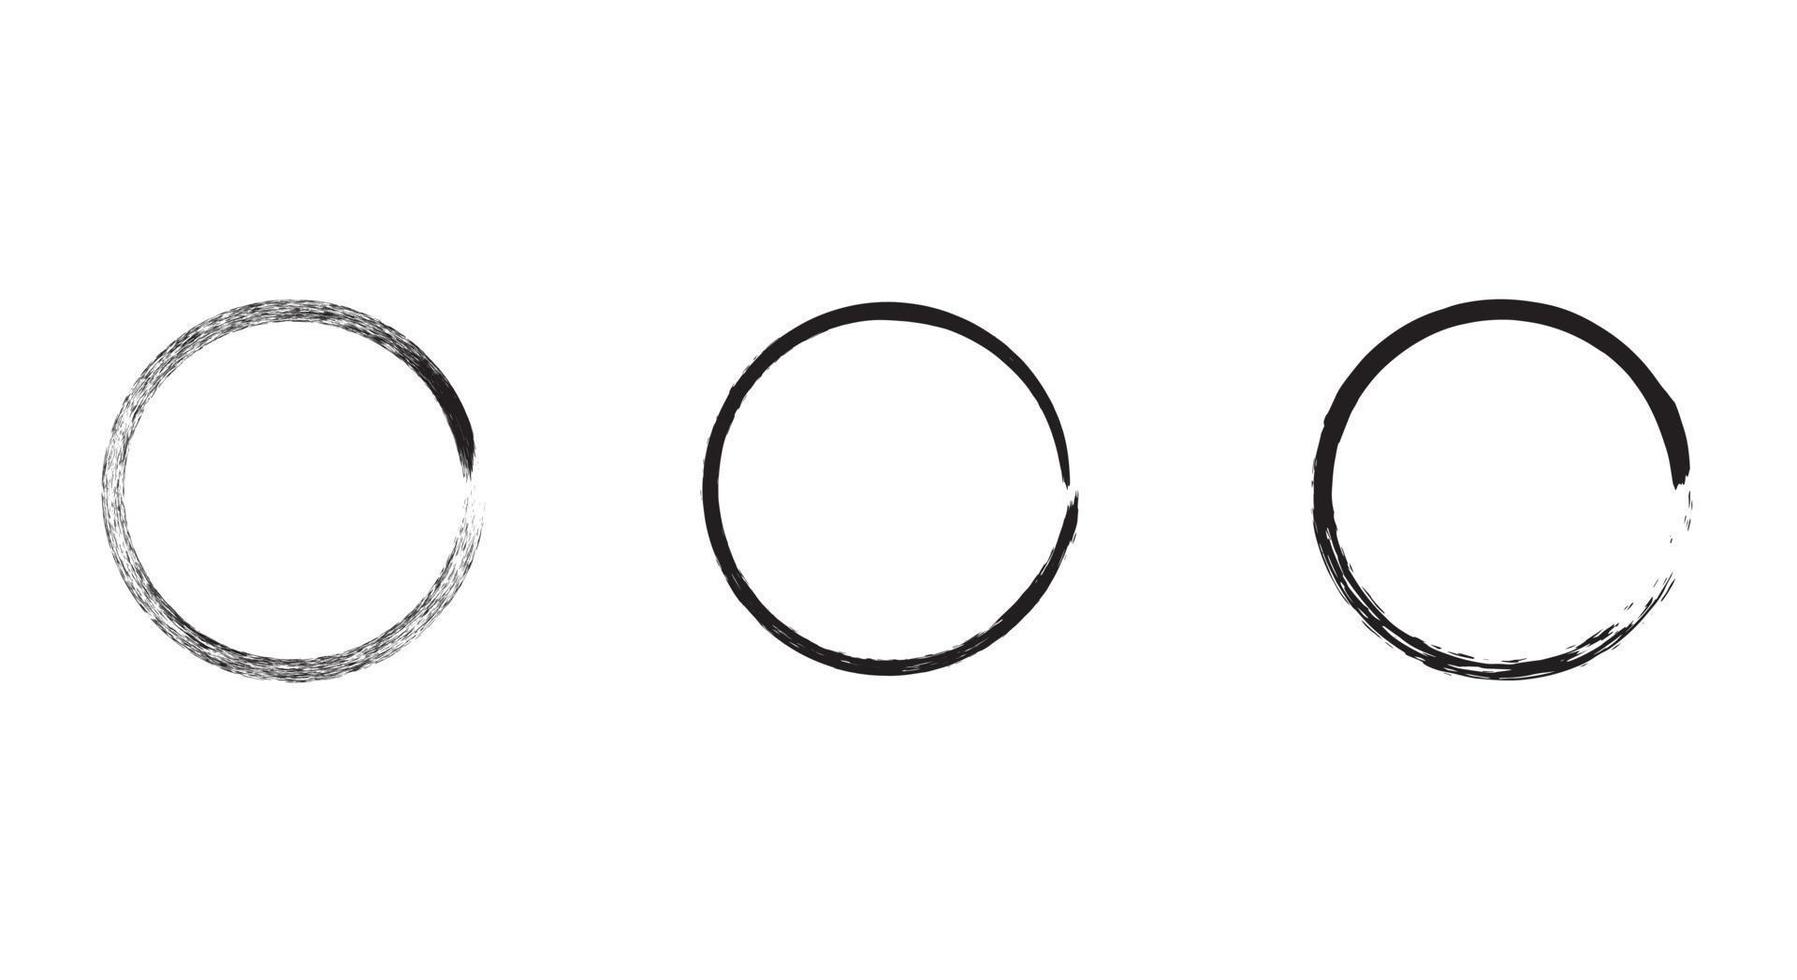 circle brush stroke vector design illustration isolated on white background